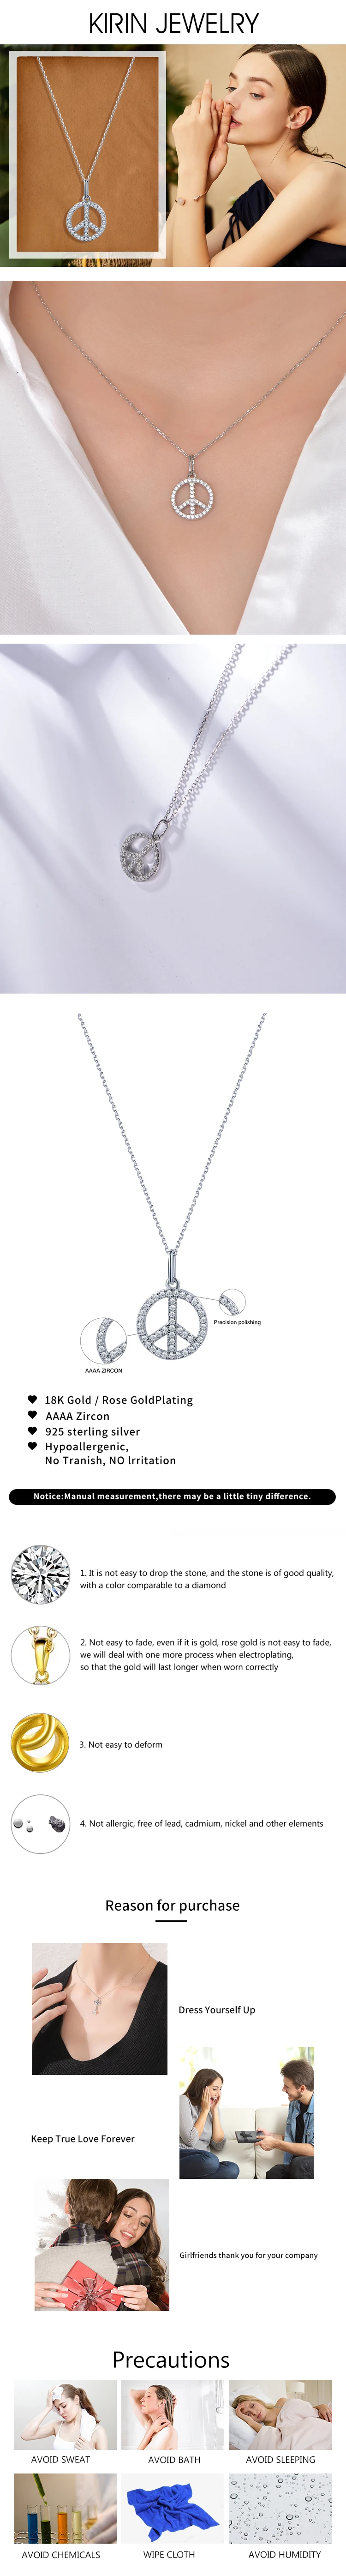 DIAMOND PEACE SIGN PENDANT IN 14K WHITE GOLD 2.10CT Diamond Peace Sign Pendant Necklace in Sterling Silver